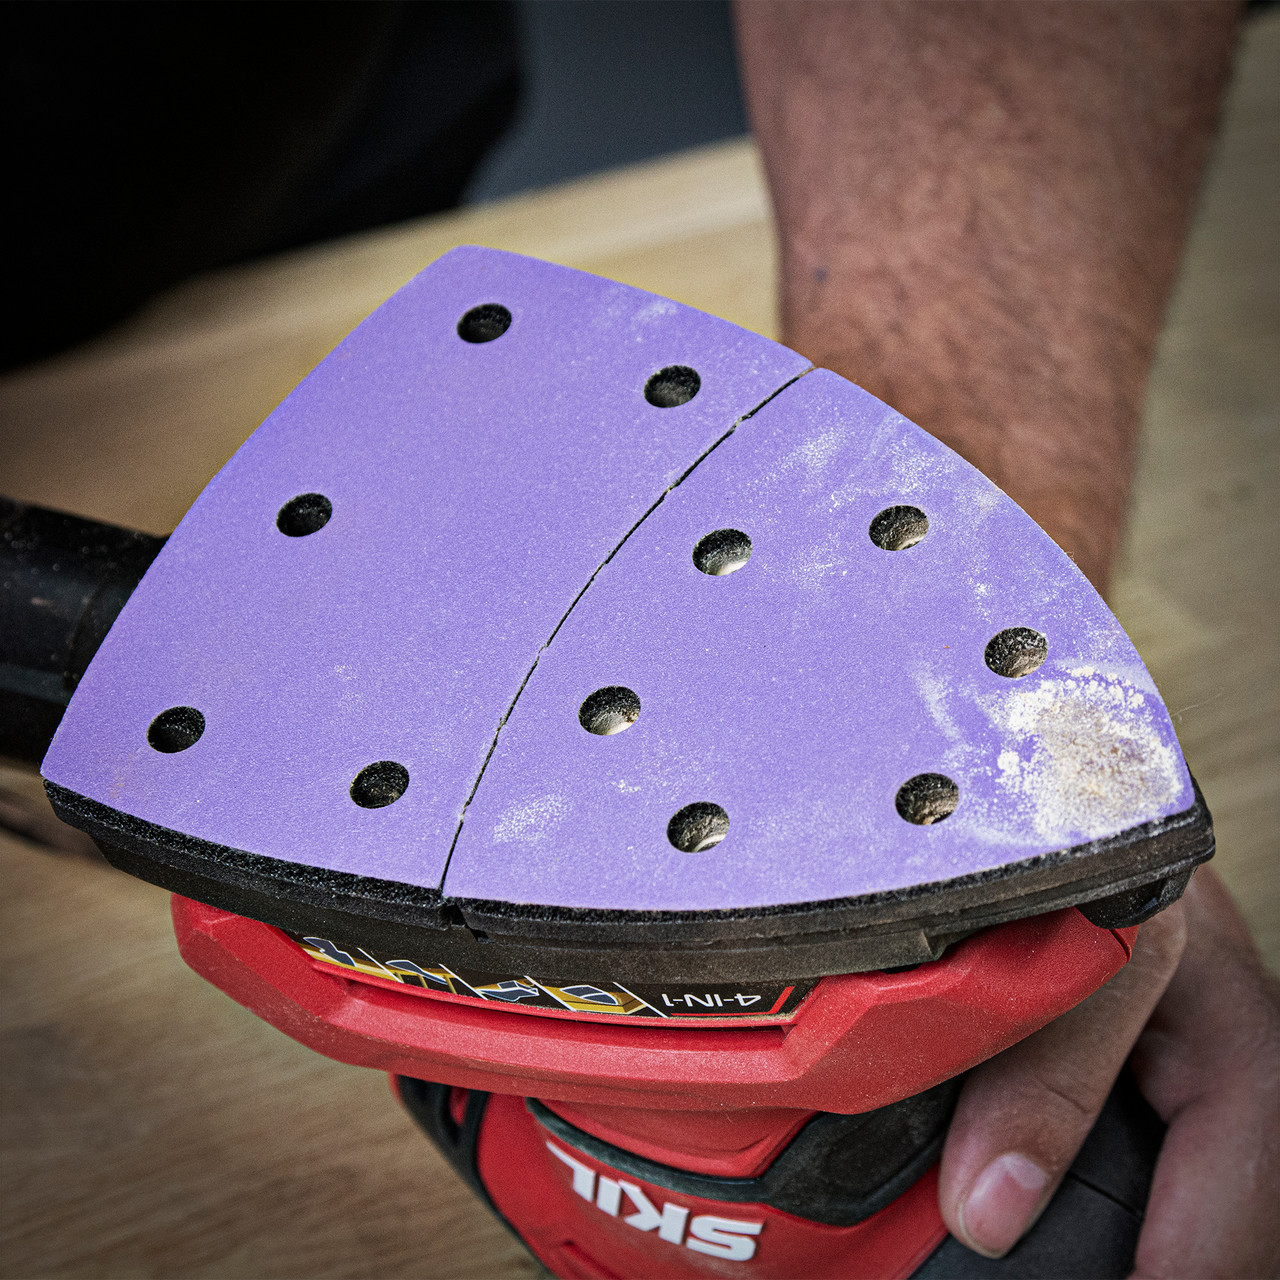 hole design ensures maximum compatibility on popular sanders